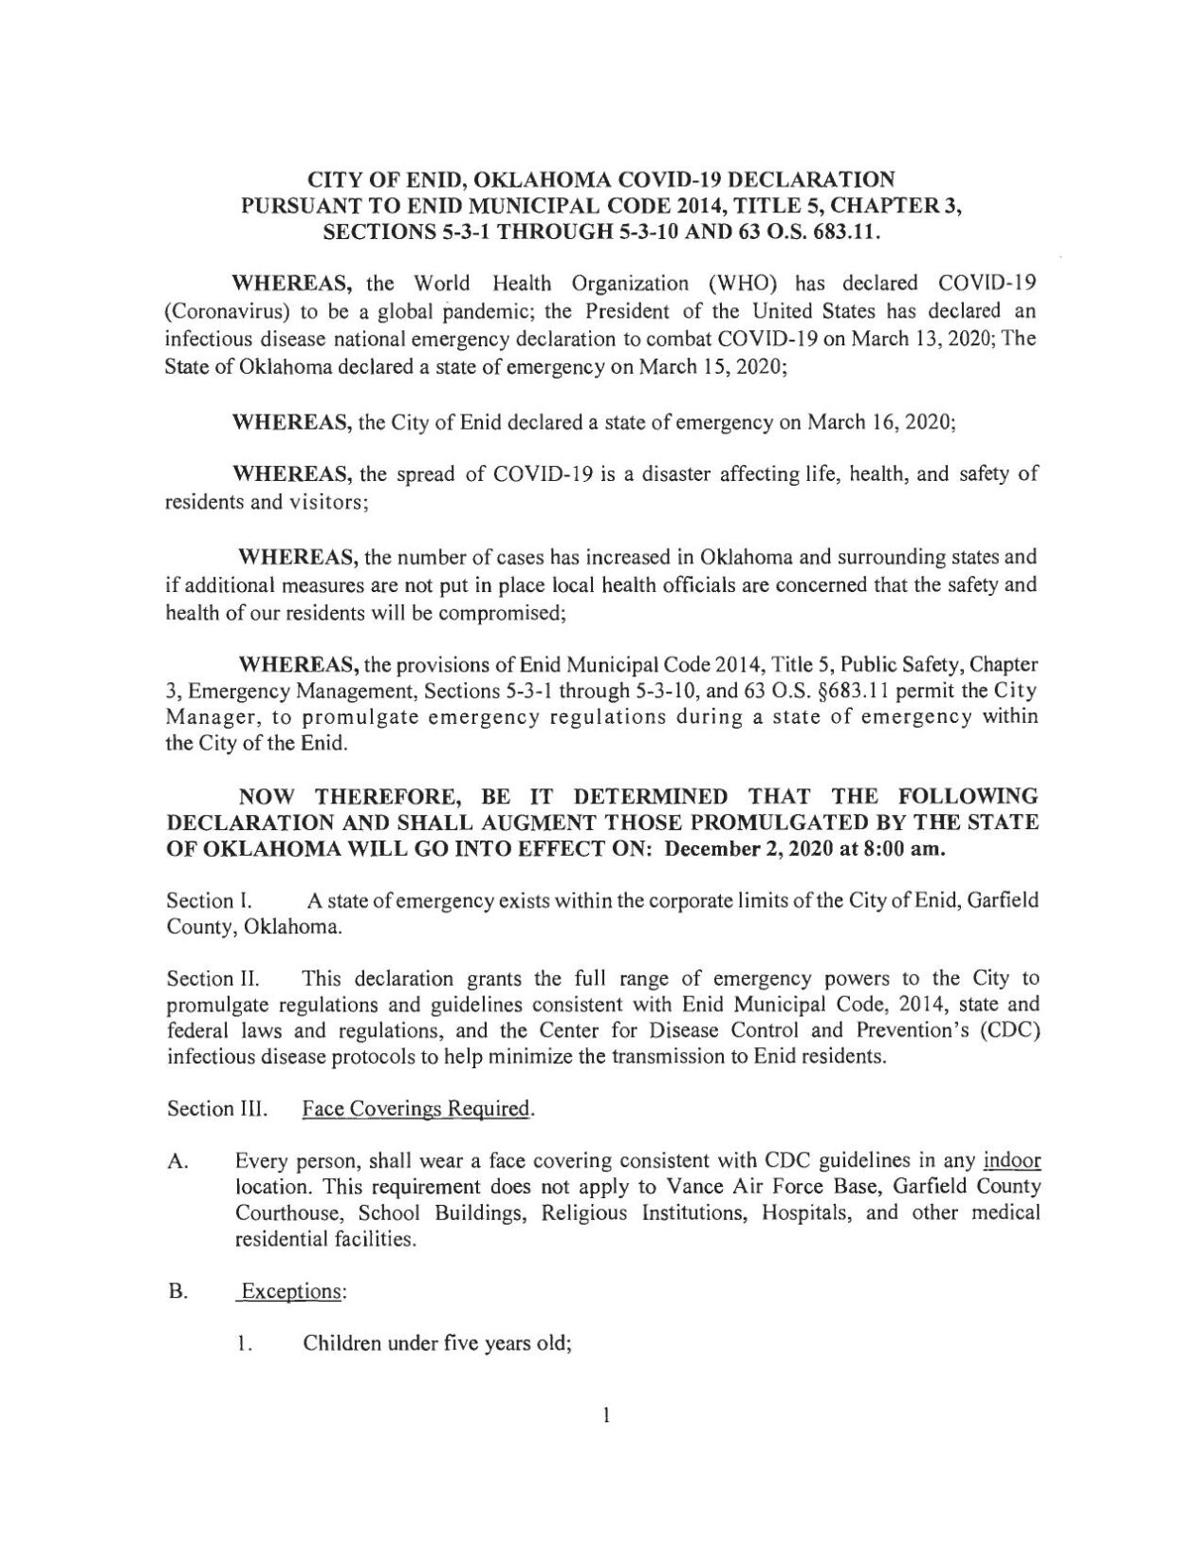 City of Enid's current mask mandate declaration